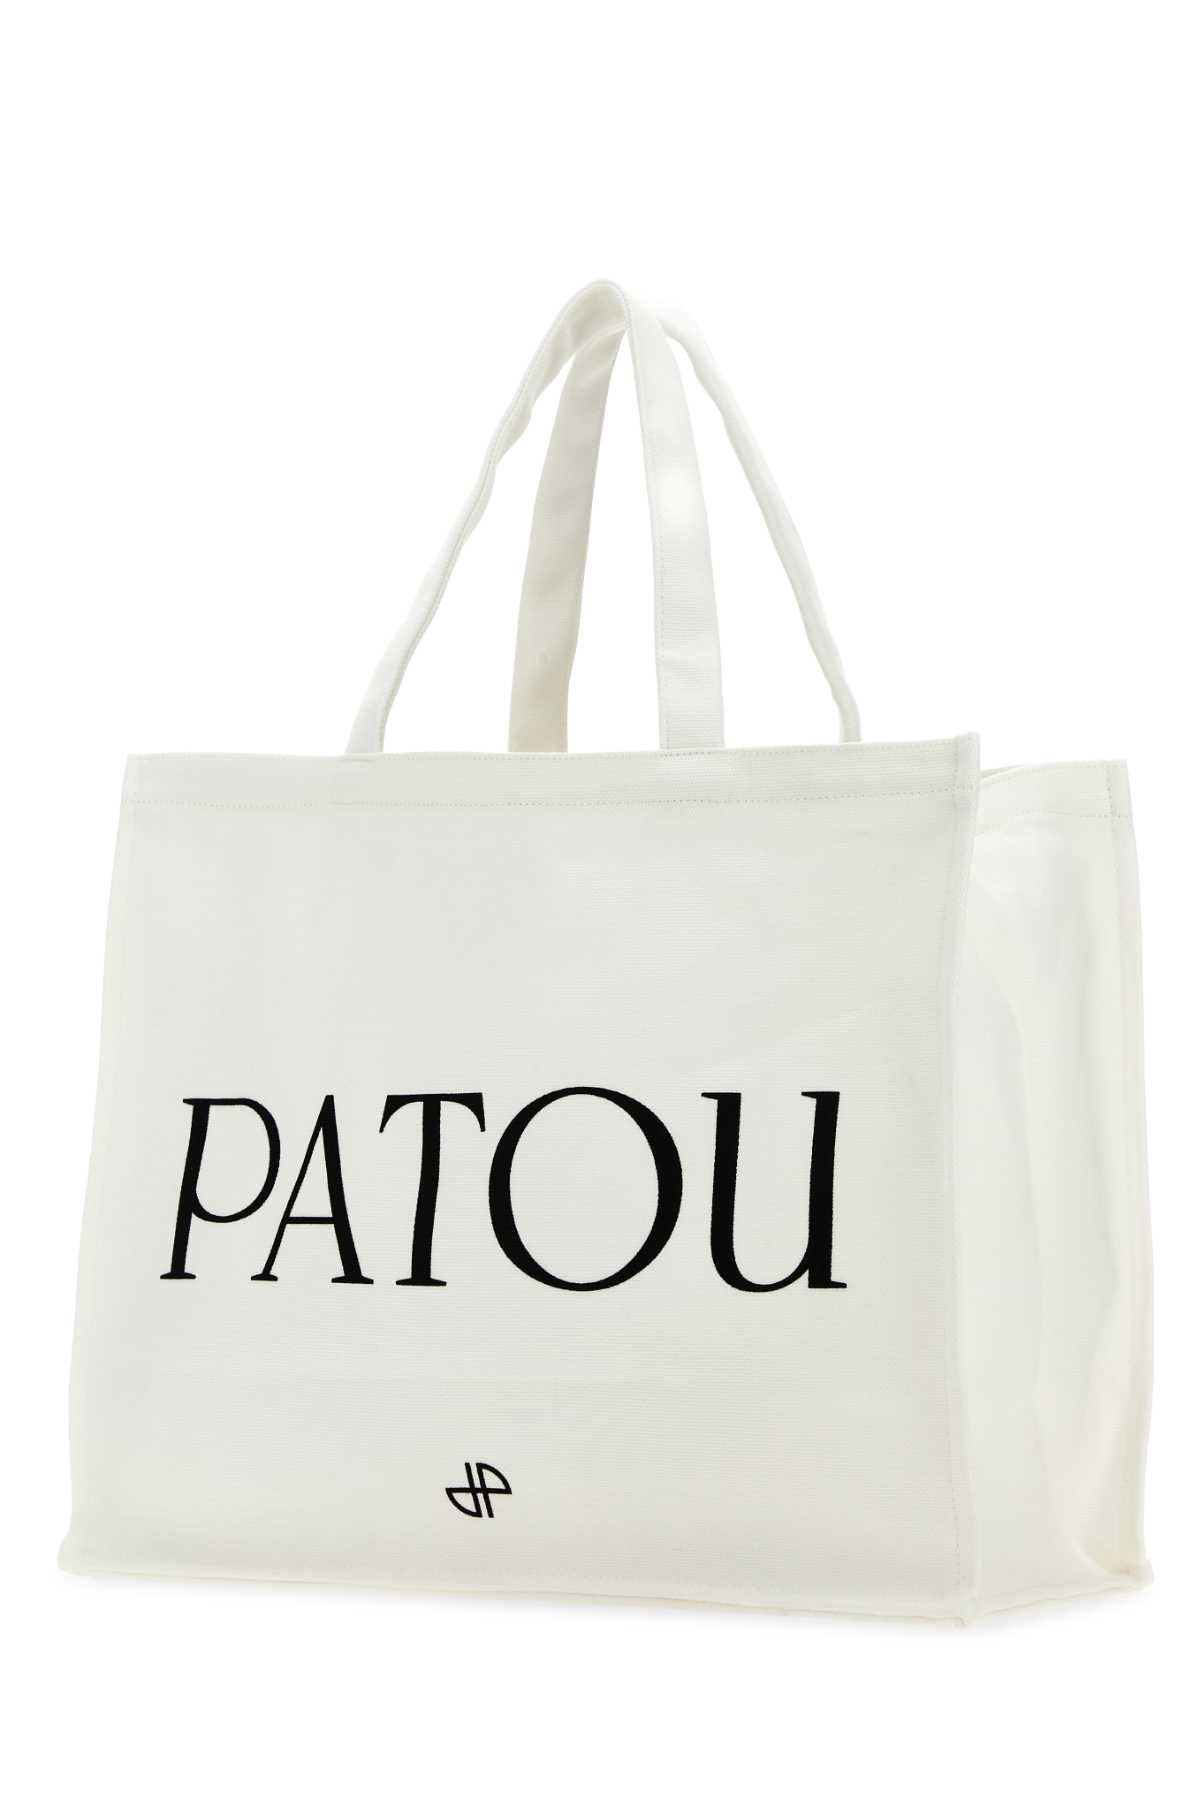 Patou White Cotton Shopping Bag In 090c